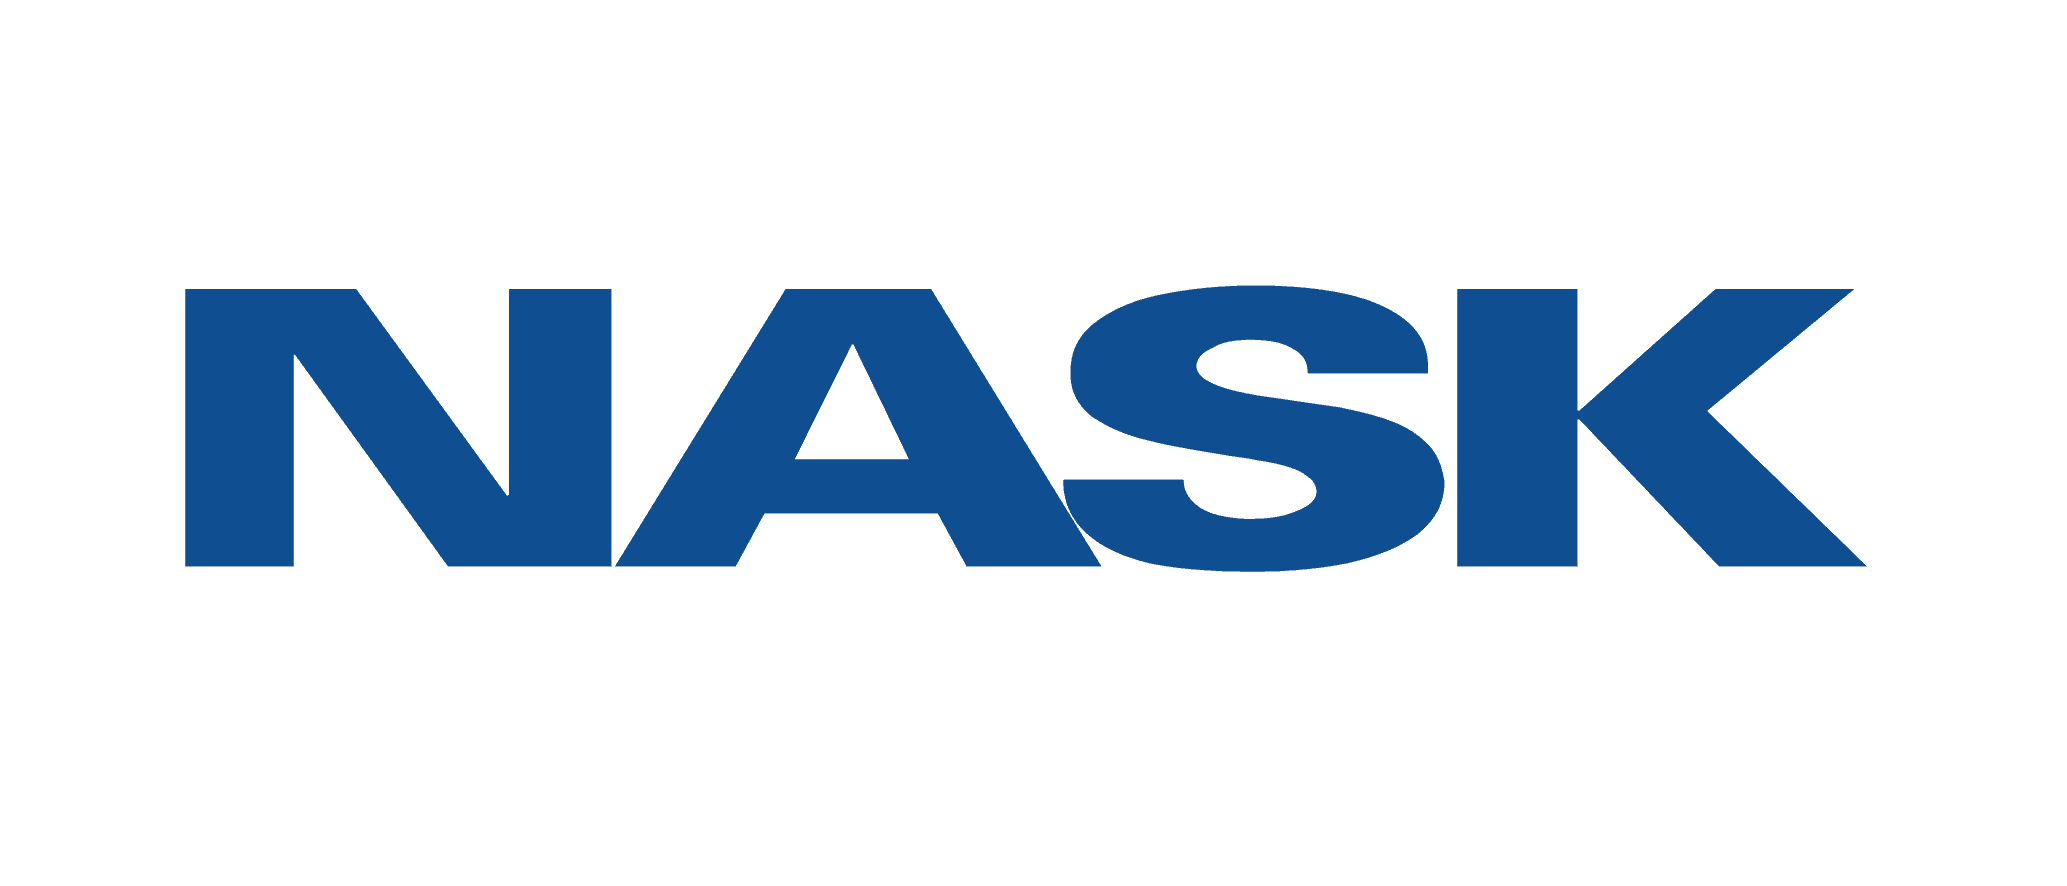 NASK logo